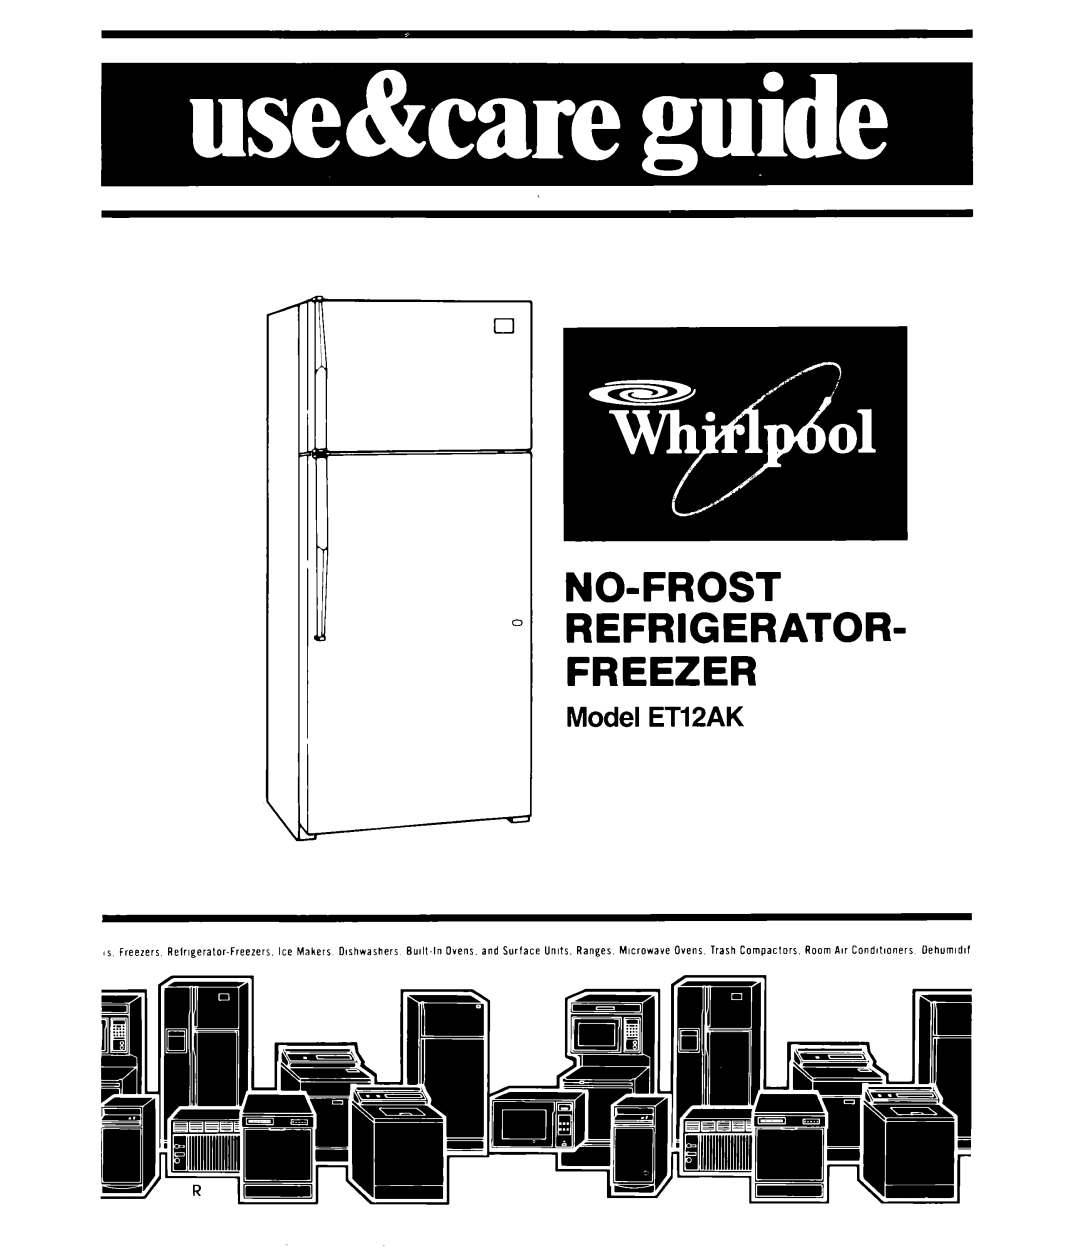 Whirlpool manual NO-FROST cREFRIGERATOR FREEZER, Model ET12AK 